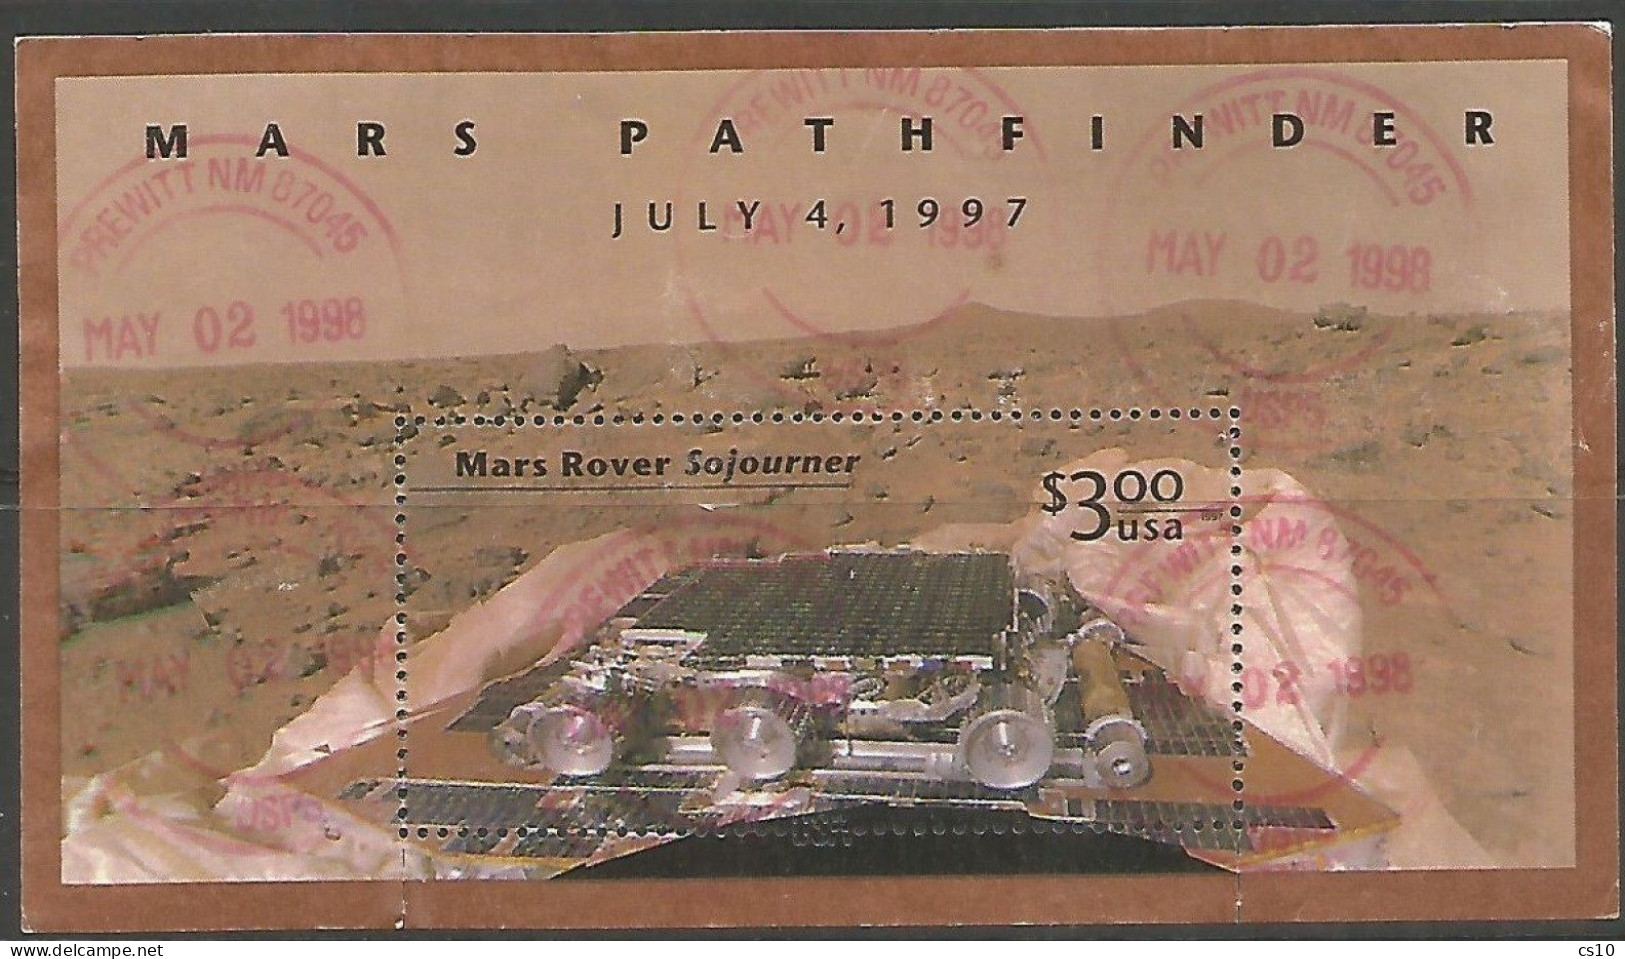 USA 1997 Mars Pathfinder SC.# 3178 S/S Postally Used (1998) Postally Used - VFU Condition - United States